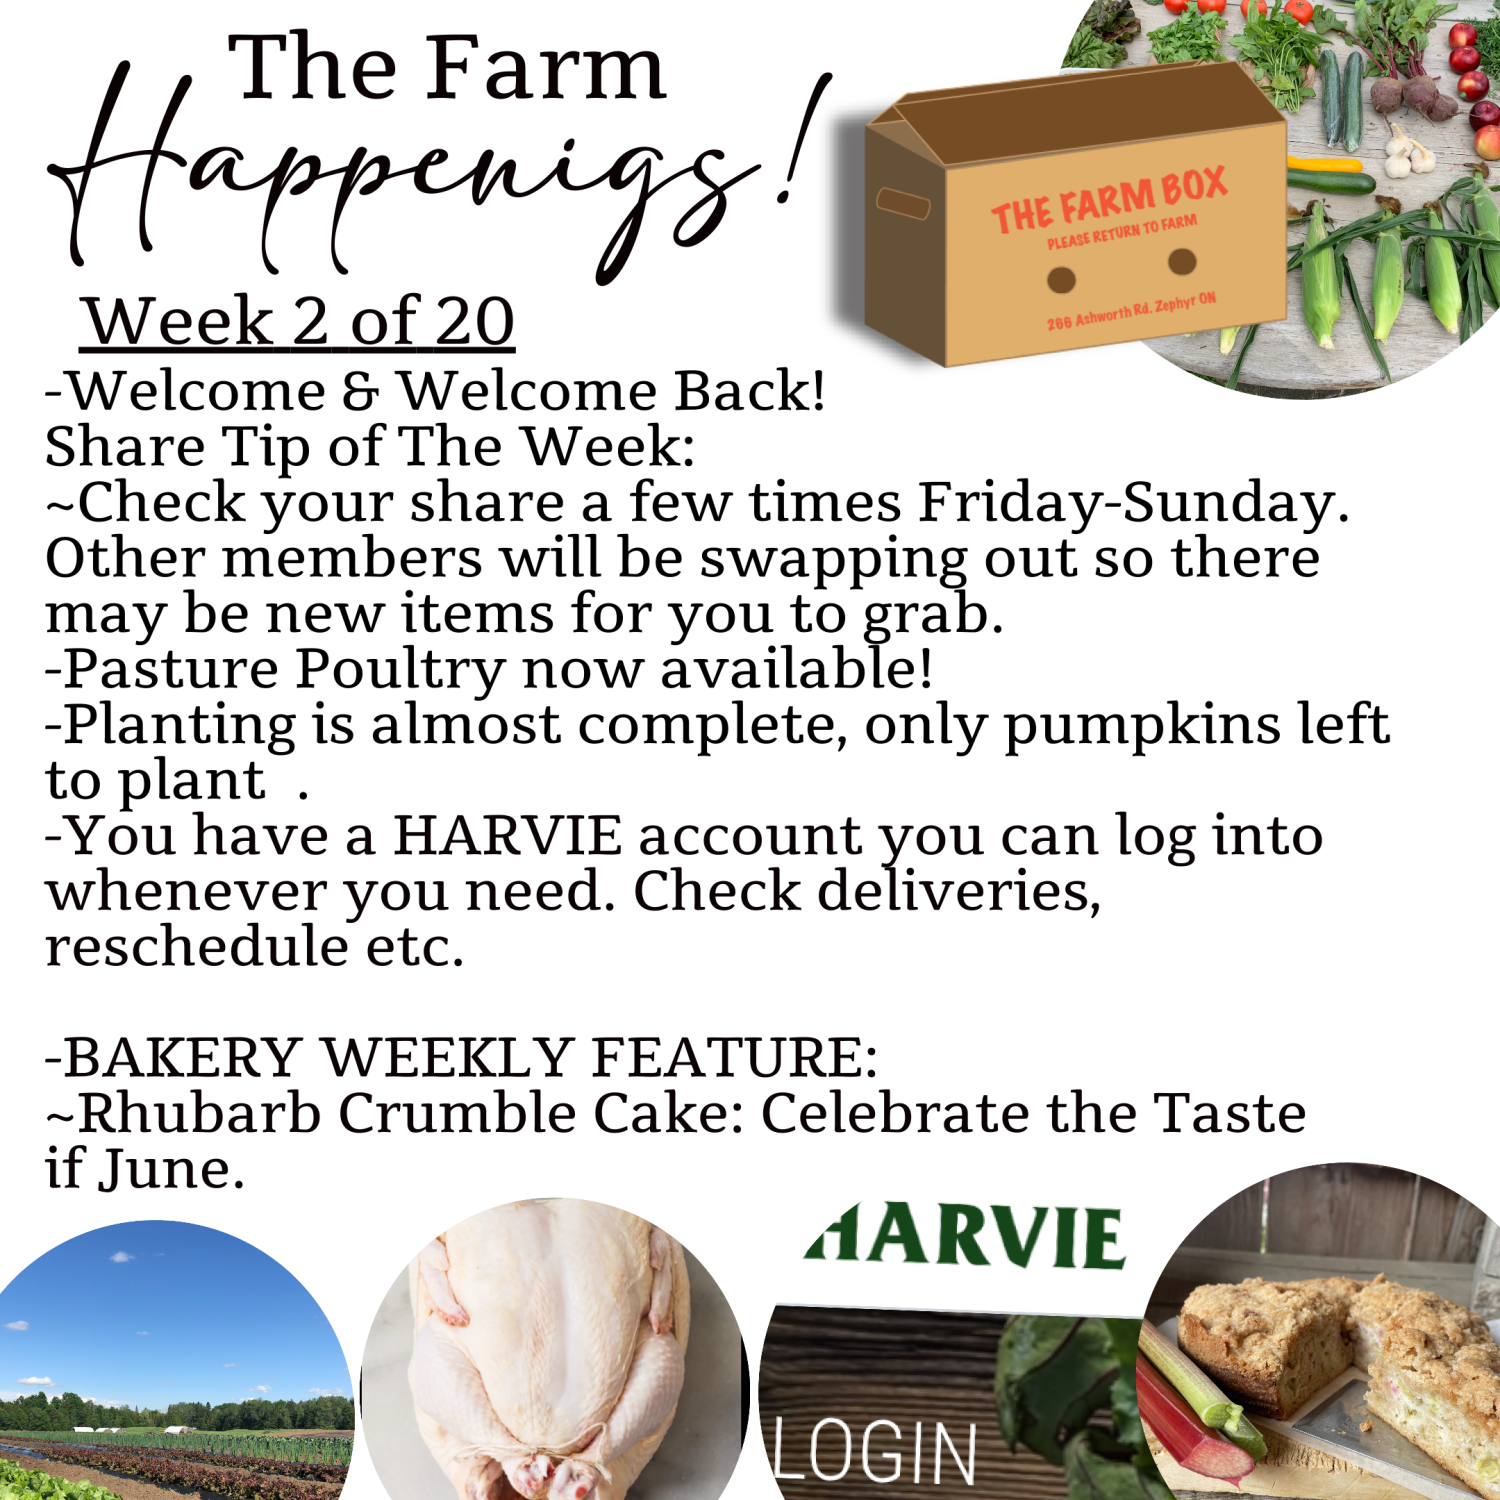 Previous Happening: "The Farm Box"-Coopers CSA Farm Farm Happenings Week 2 of 20